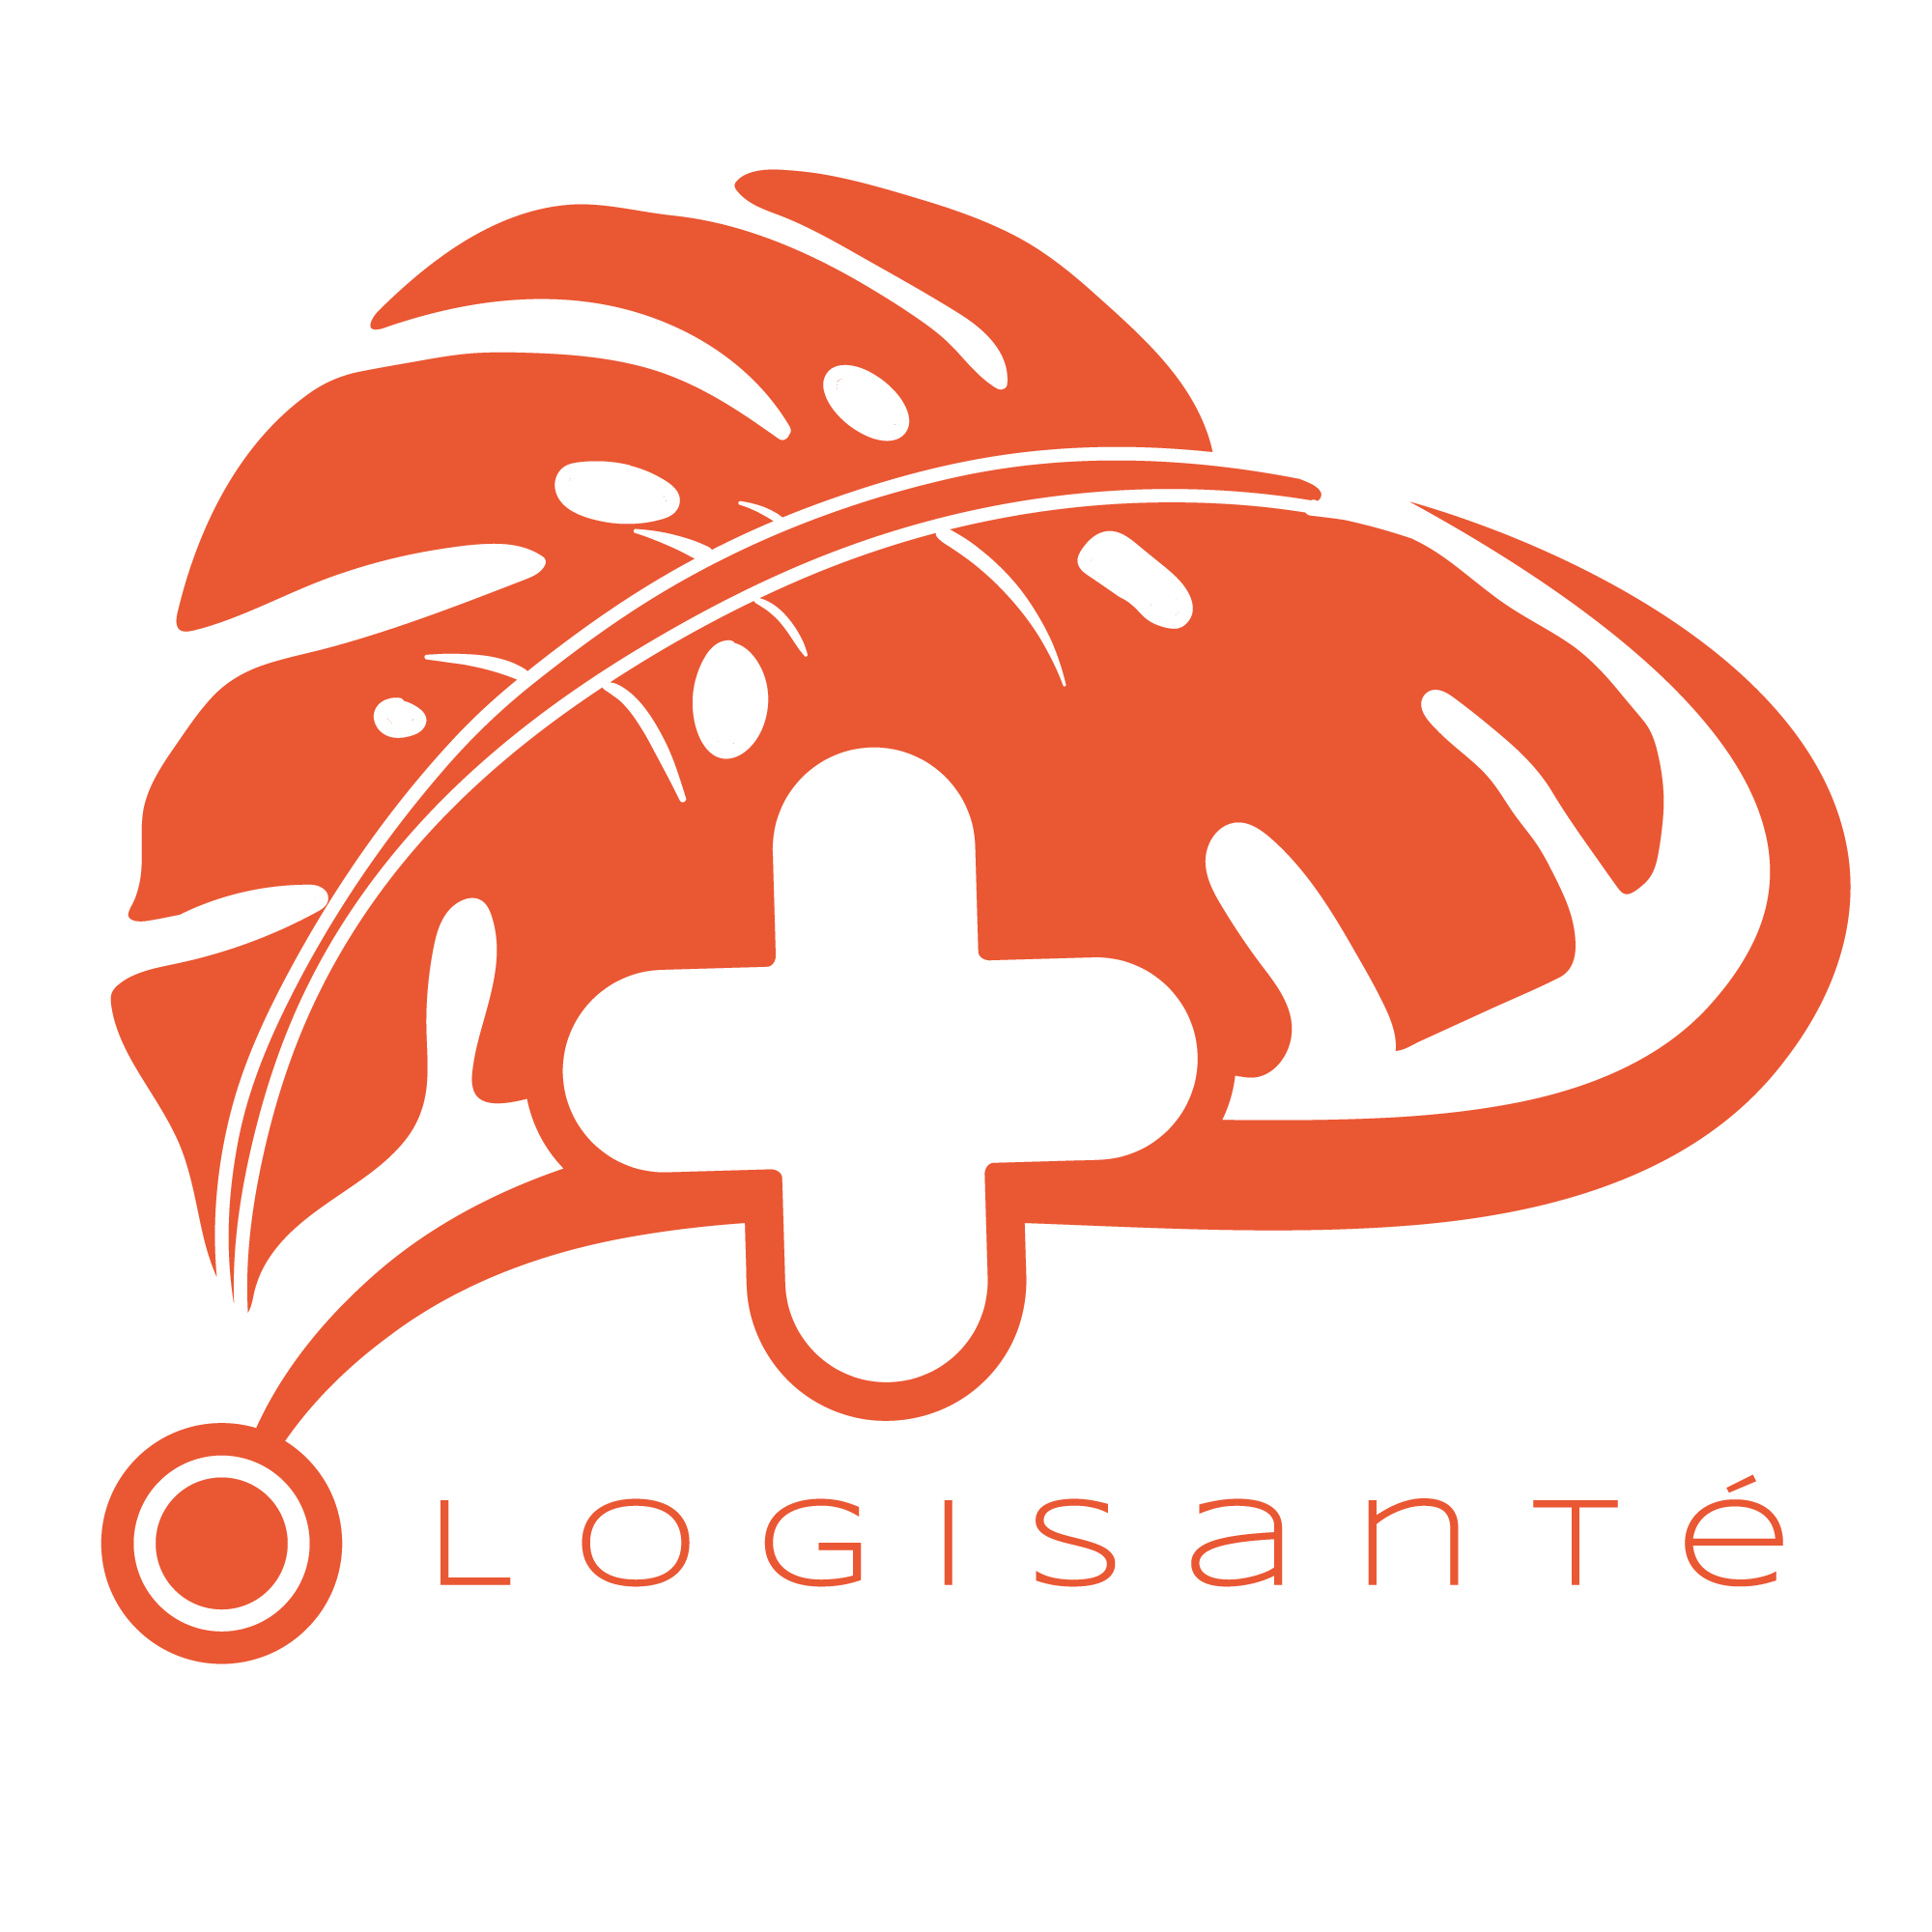 Logisante logo